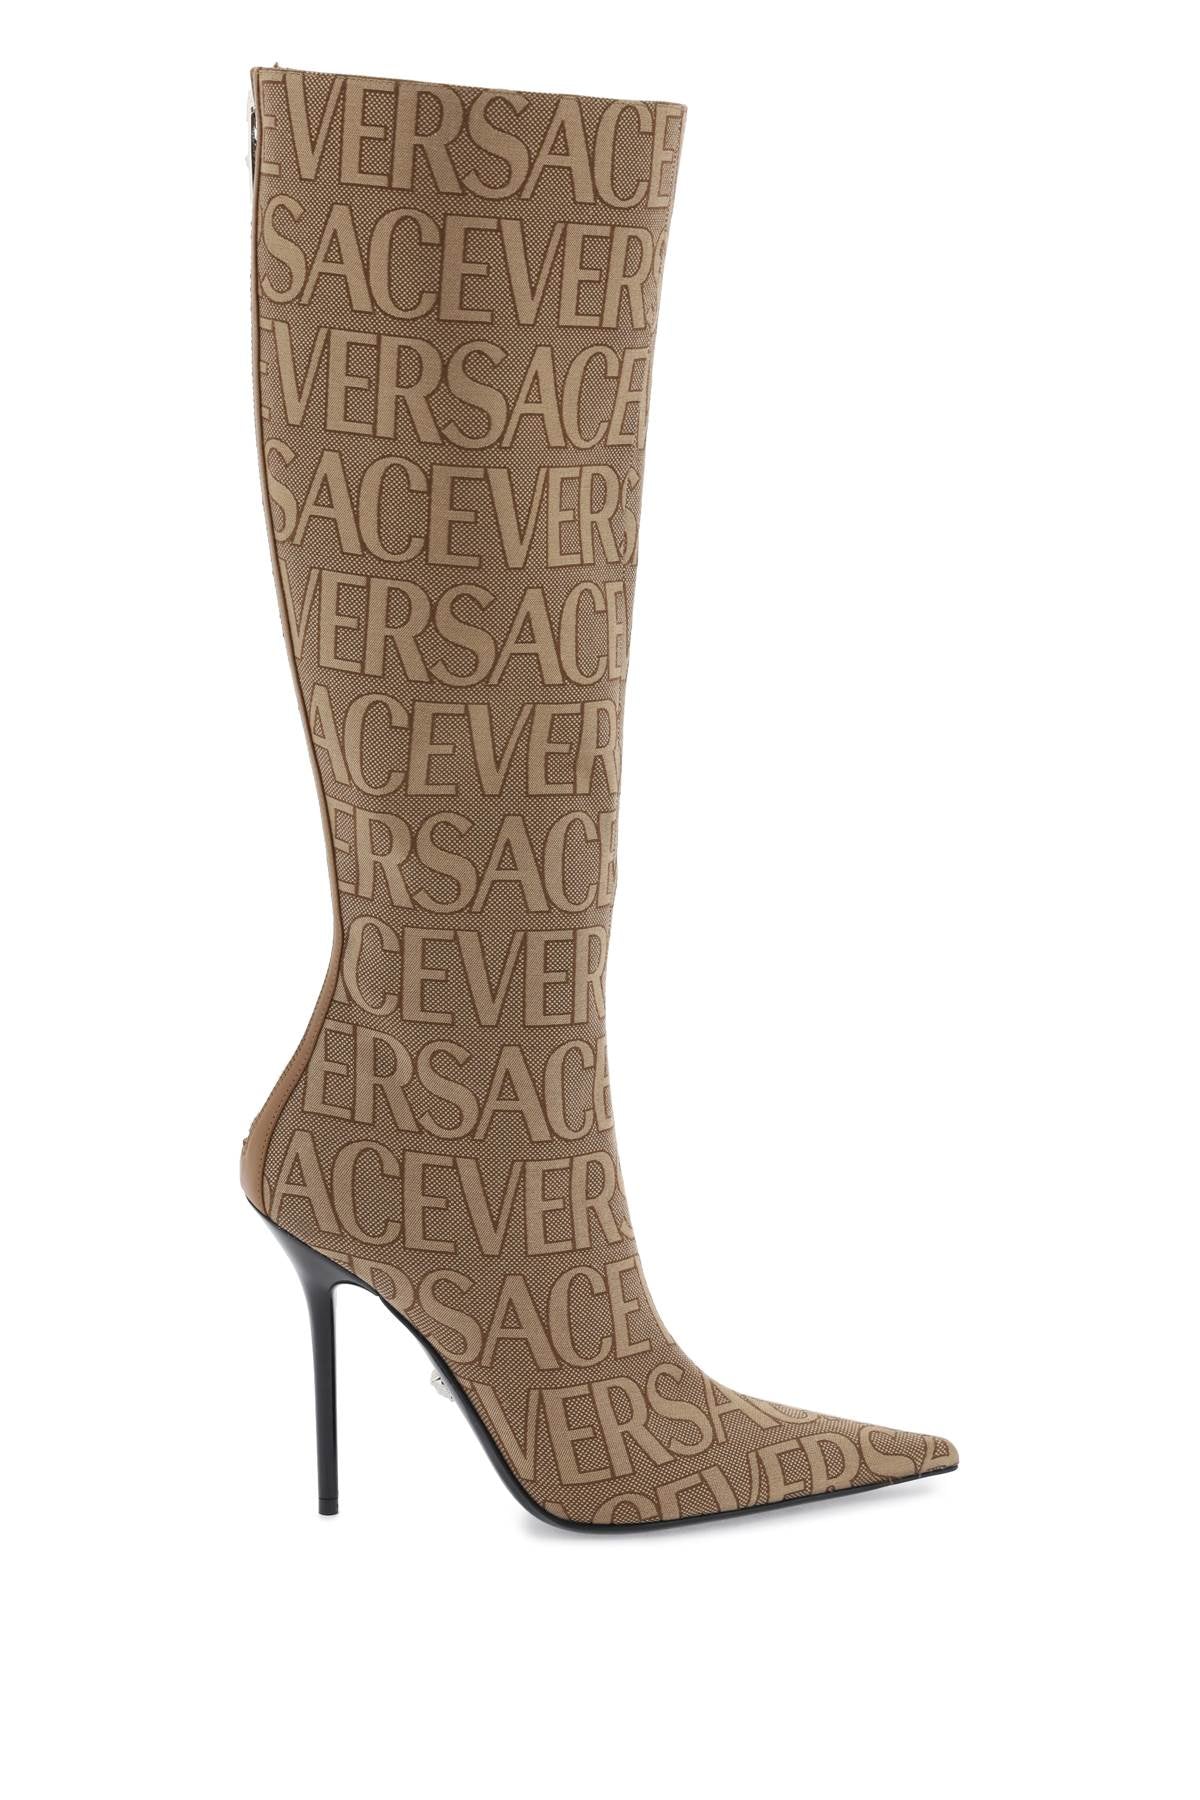 Versace 'versace allover' boots-0